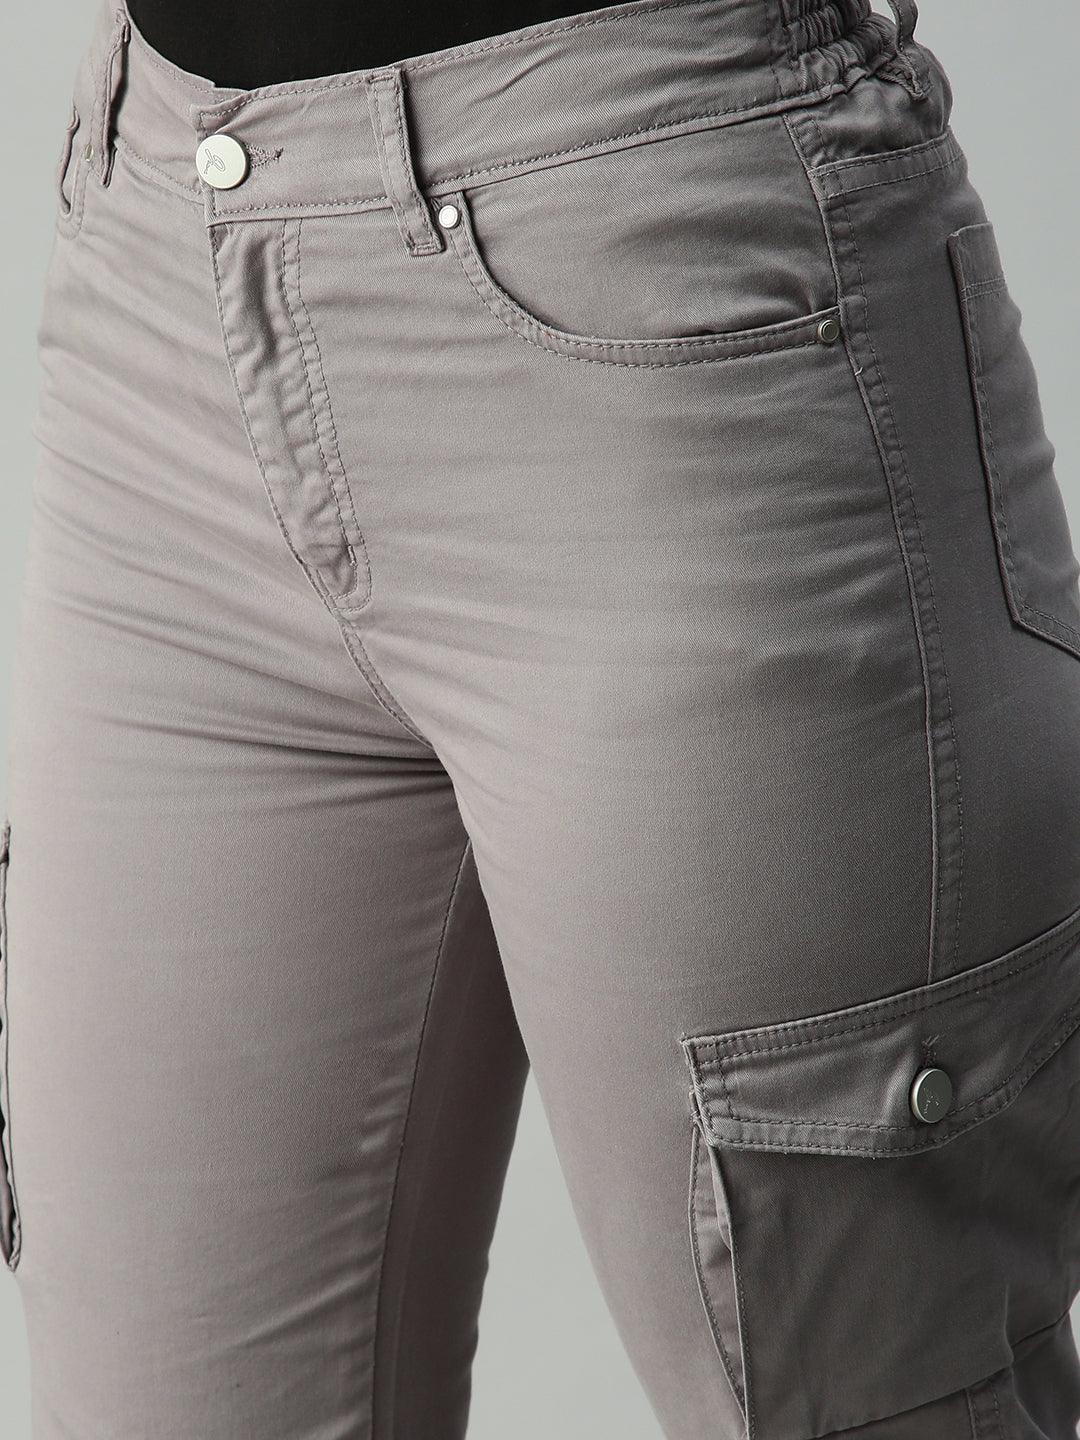 Women's Grey Solid Denim Straight Jeans